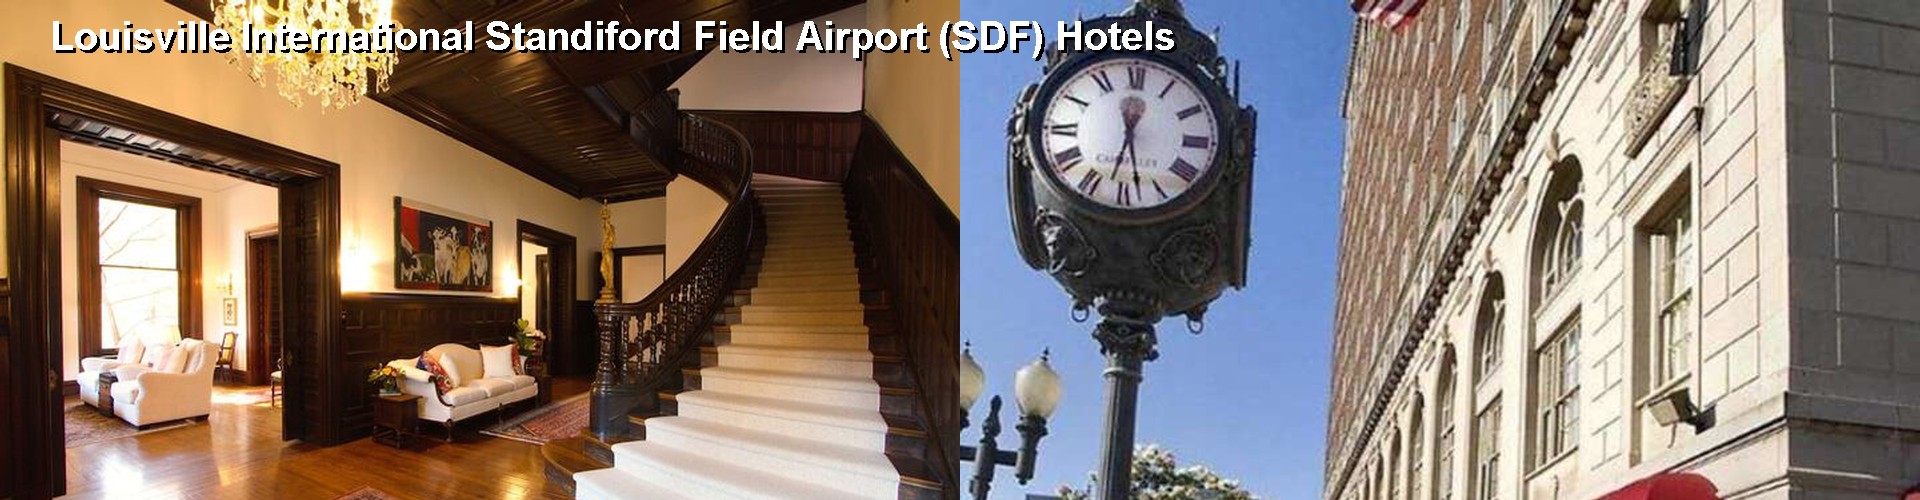 5 Best Hotels near Louisville International Standiford Field Airport (SDF)